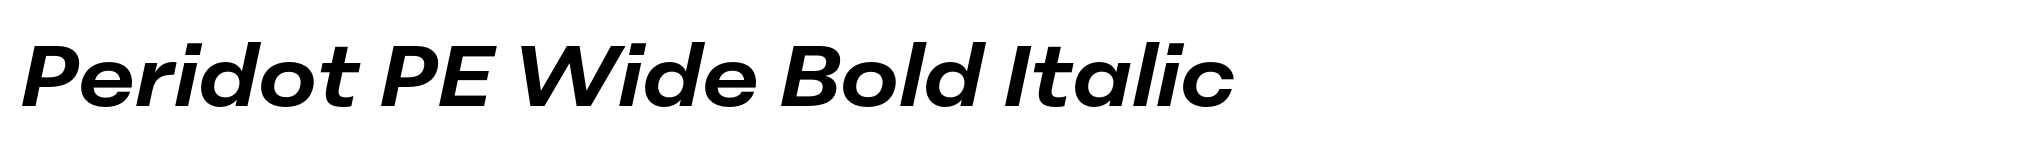 Peridot PE Wide Bold Italic image